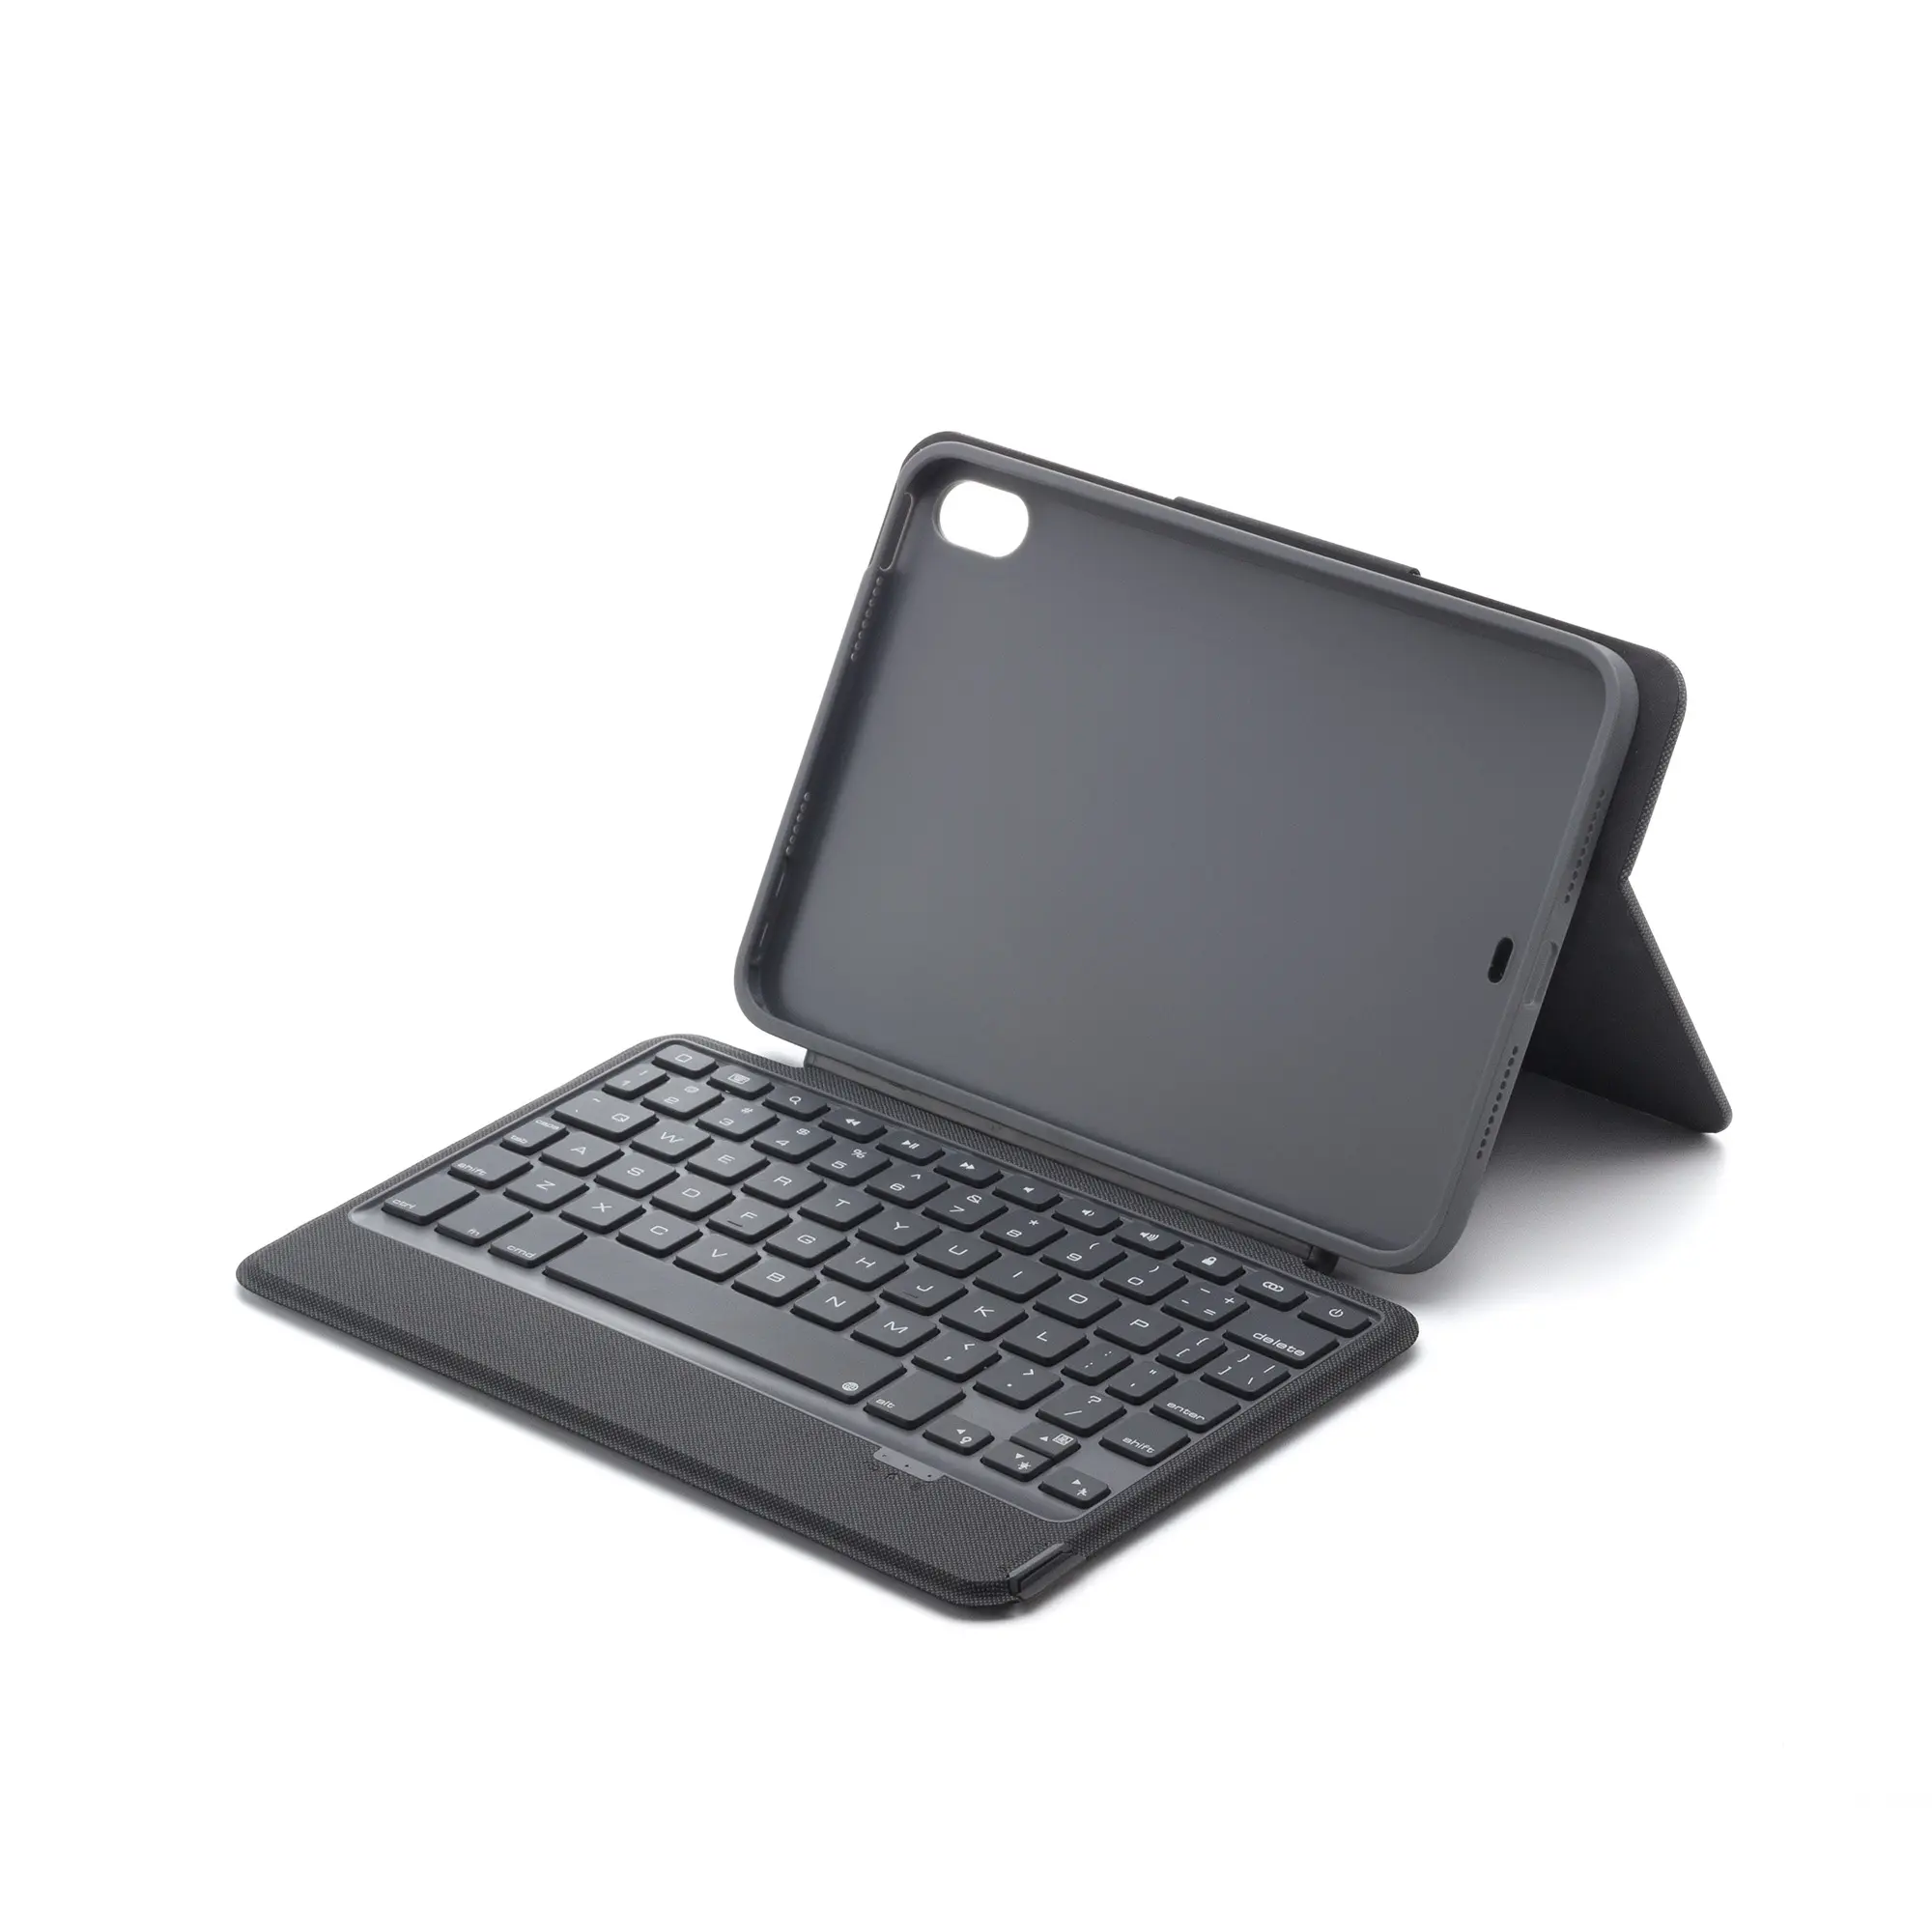 सेब आईपैड मिनी 6 8.7 इंच फोल्डेबल स्प्लिट टाइप टैबलेट ब्लूटूथ मैजिक कीबोर्ड केस आरजीबी बैकलाइट के साथ